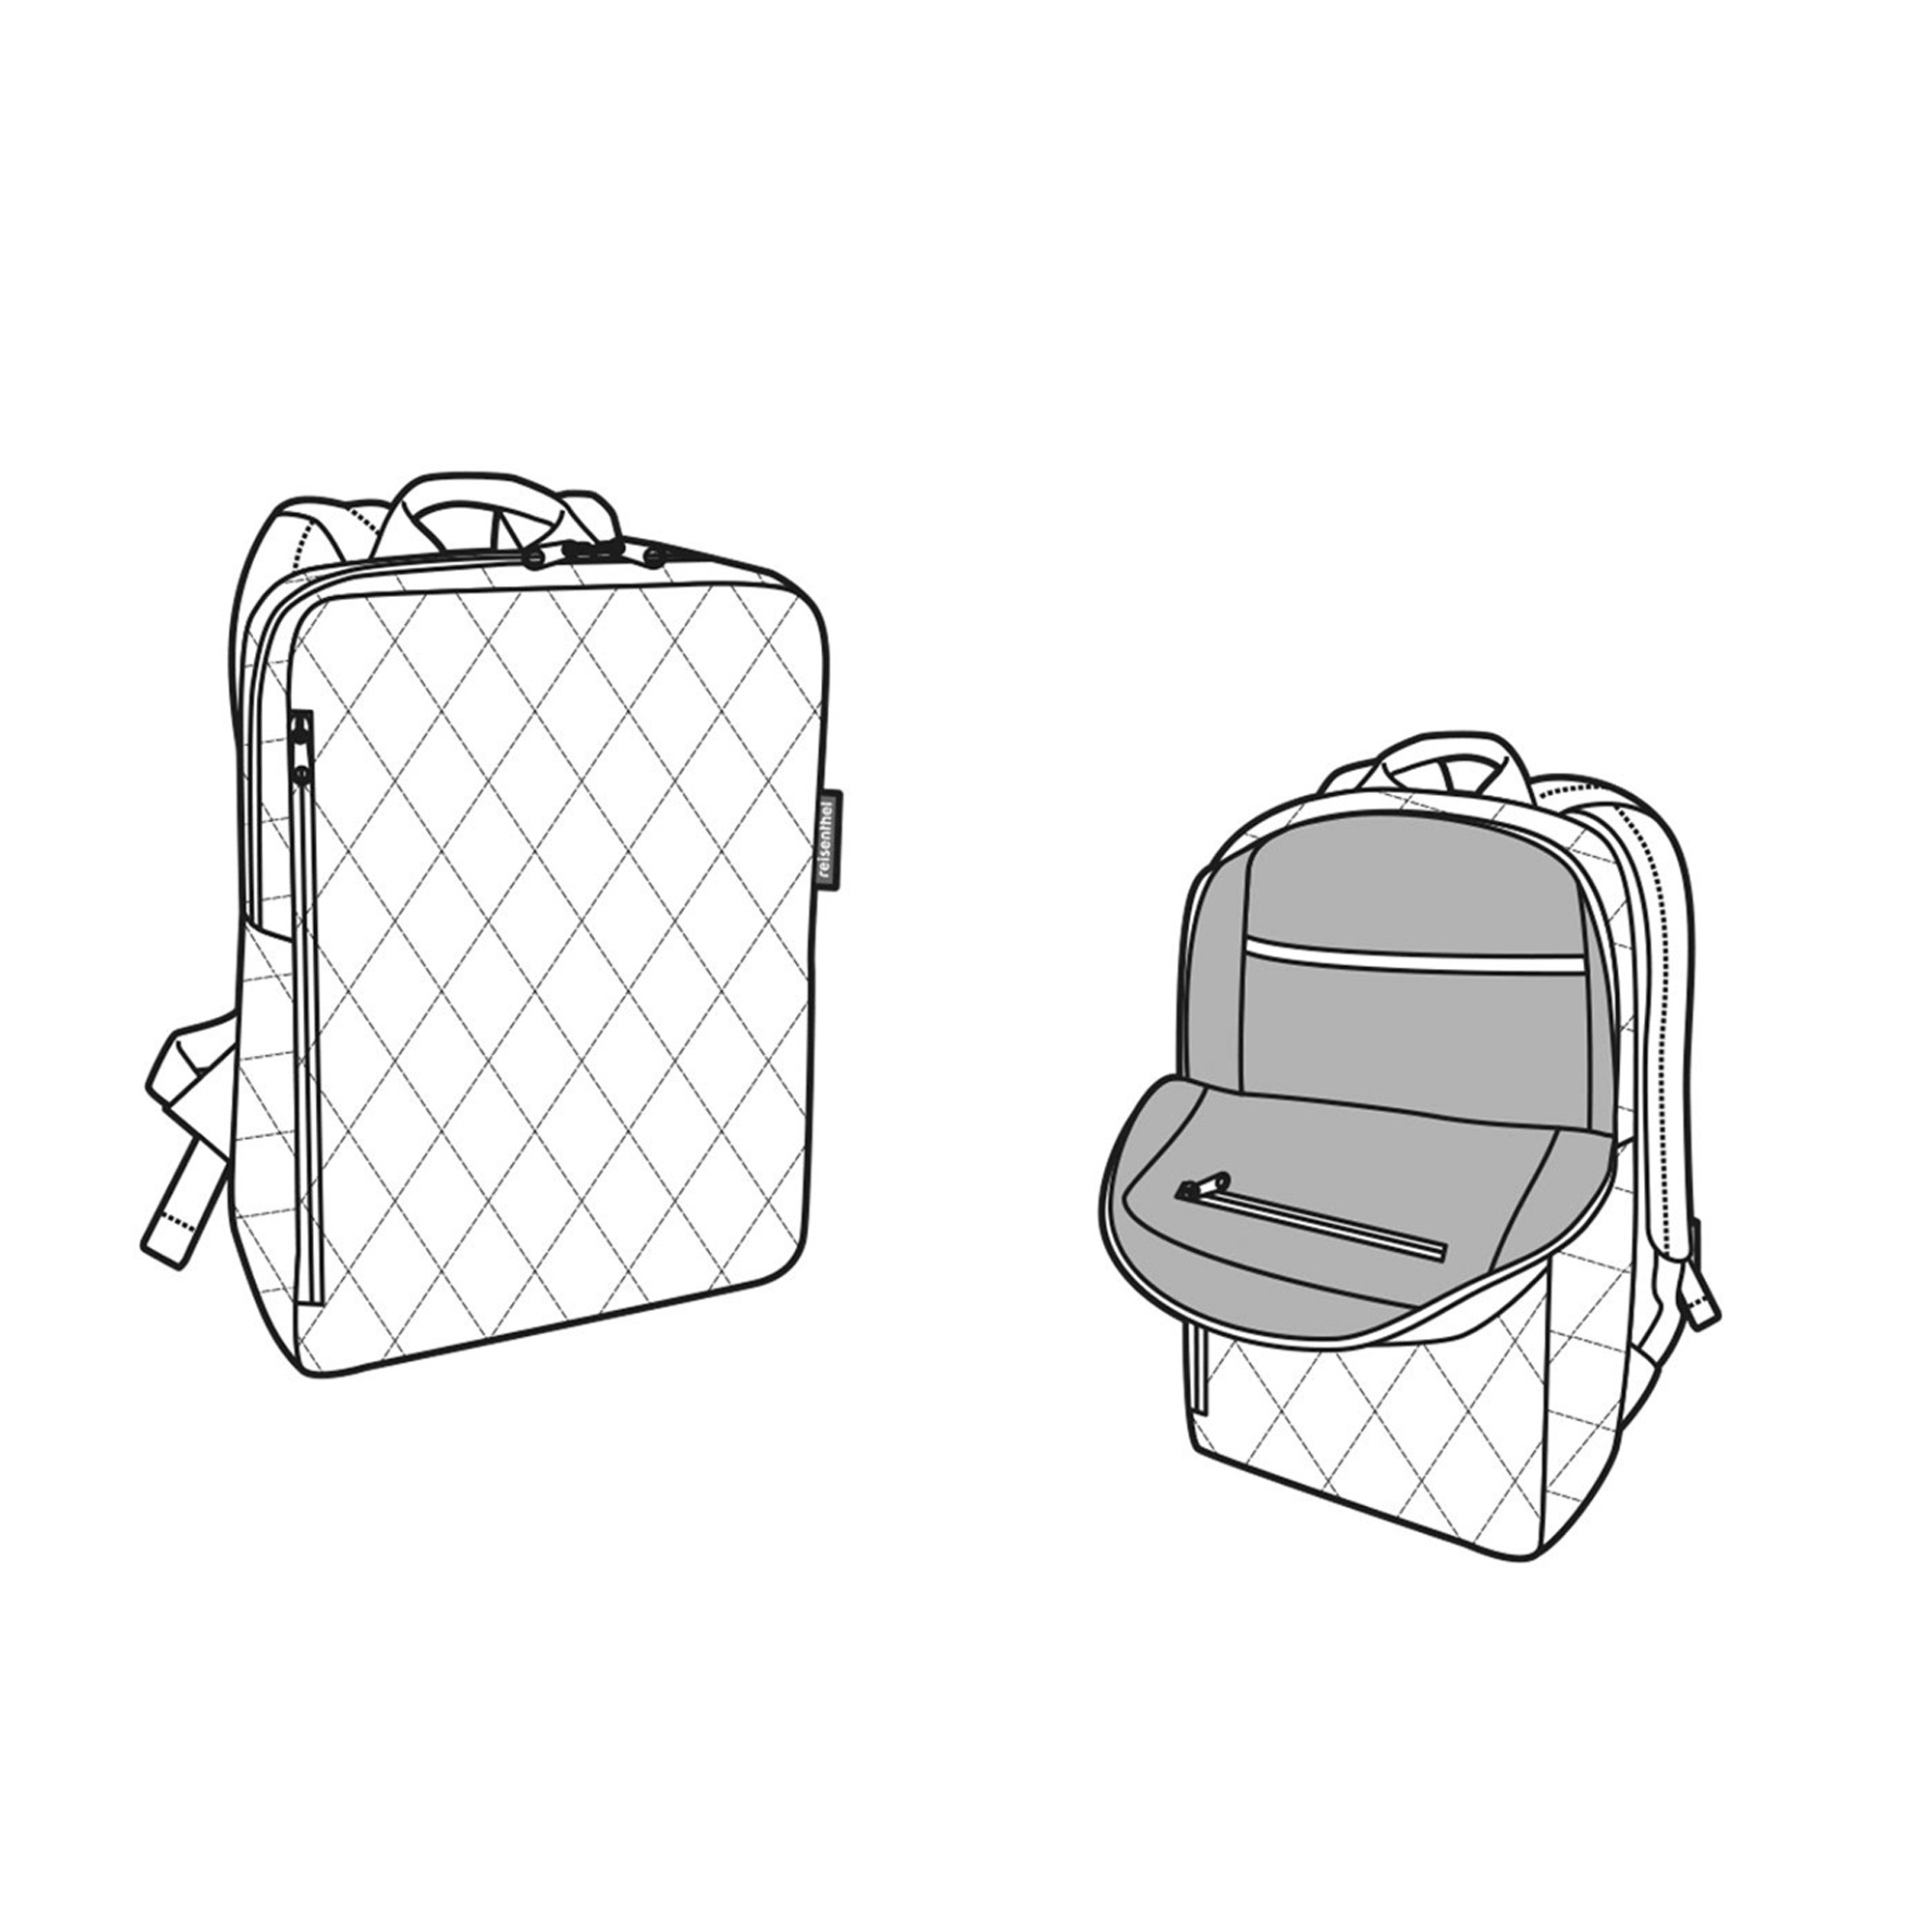 reisenthel - classic backpack M - rhombus olive